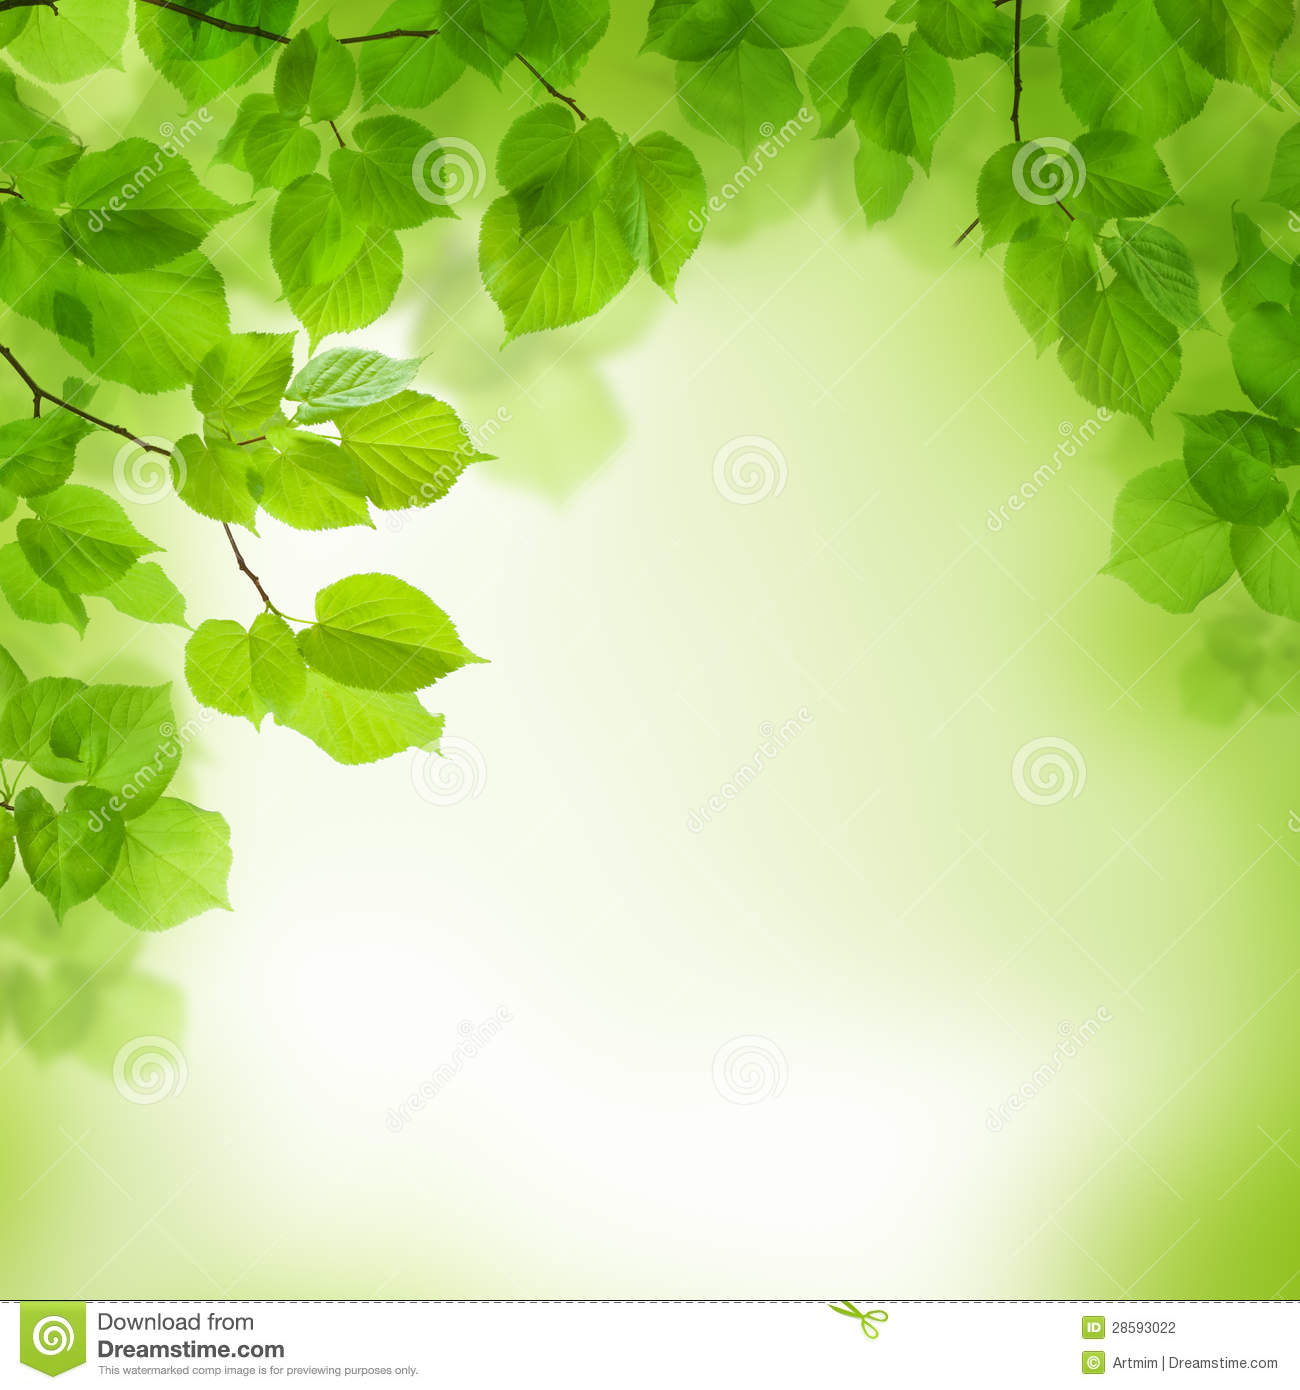 Free download Green Leaf Wallpaper Border HD Wallpapers on picsfaircom